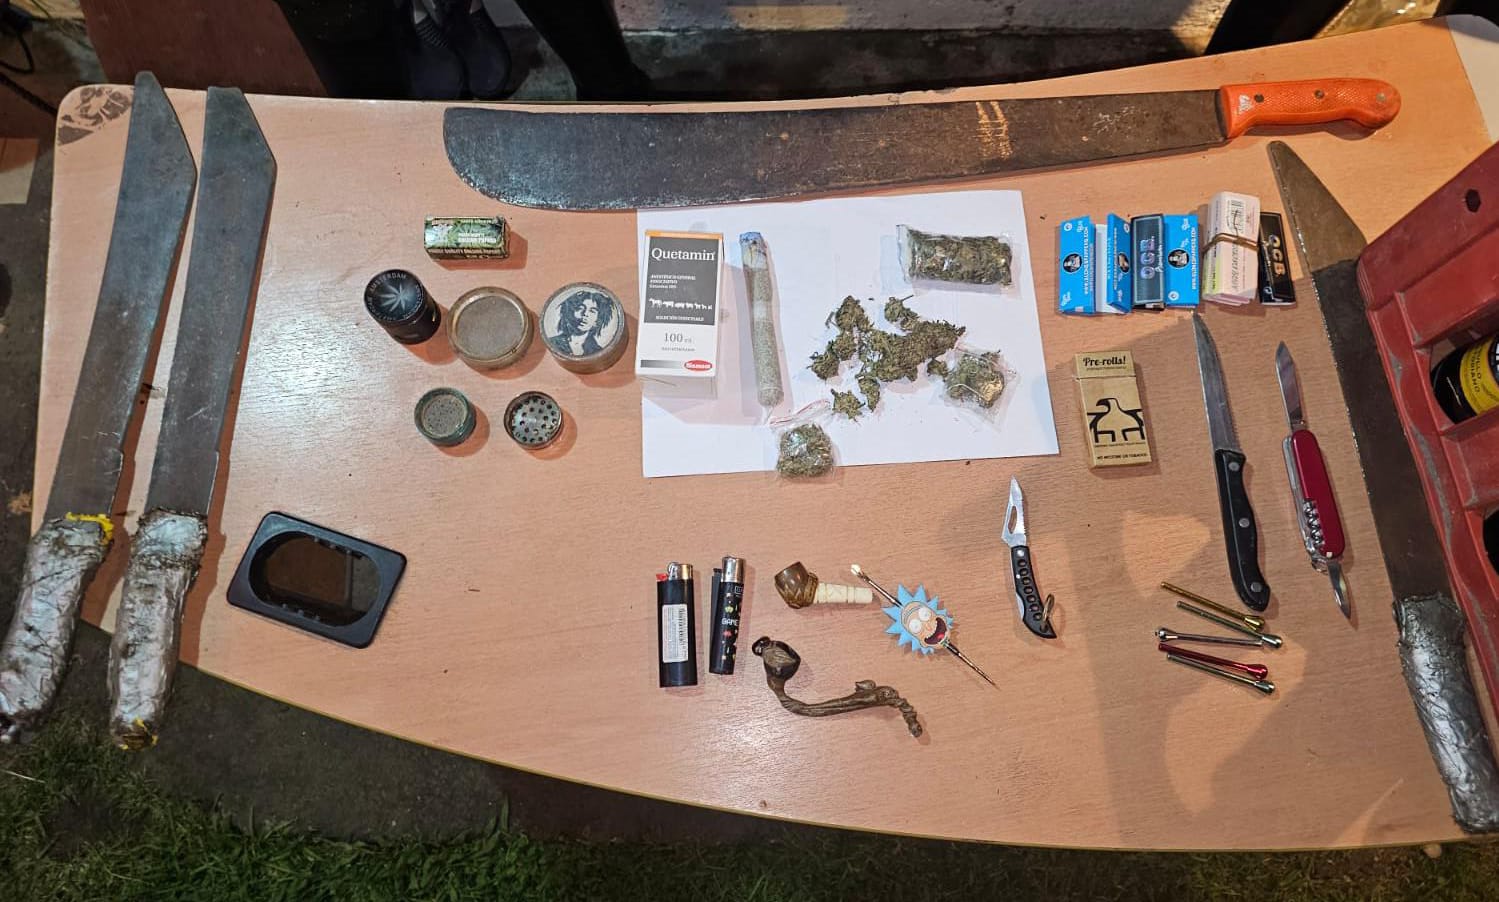 Se encontraron varias dosis de marihuana en fundas transparentes.